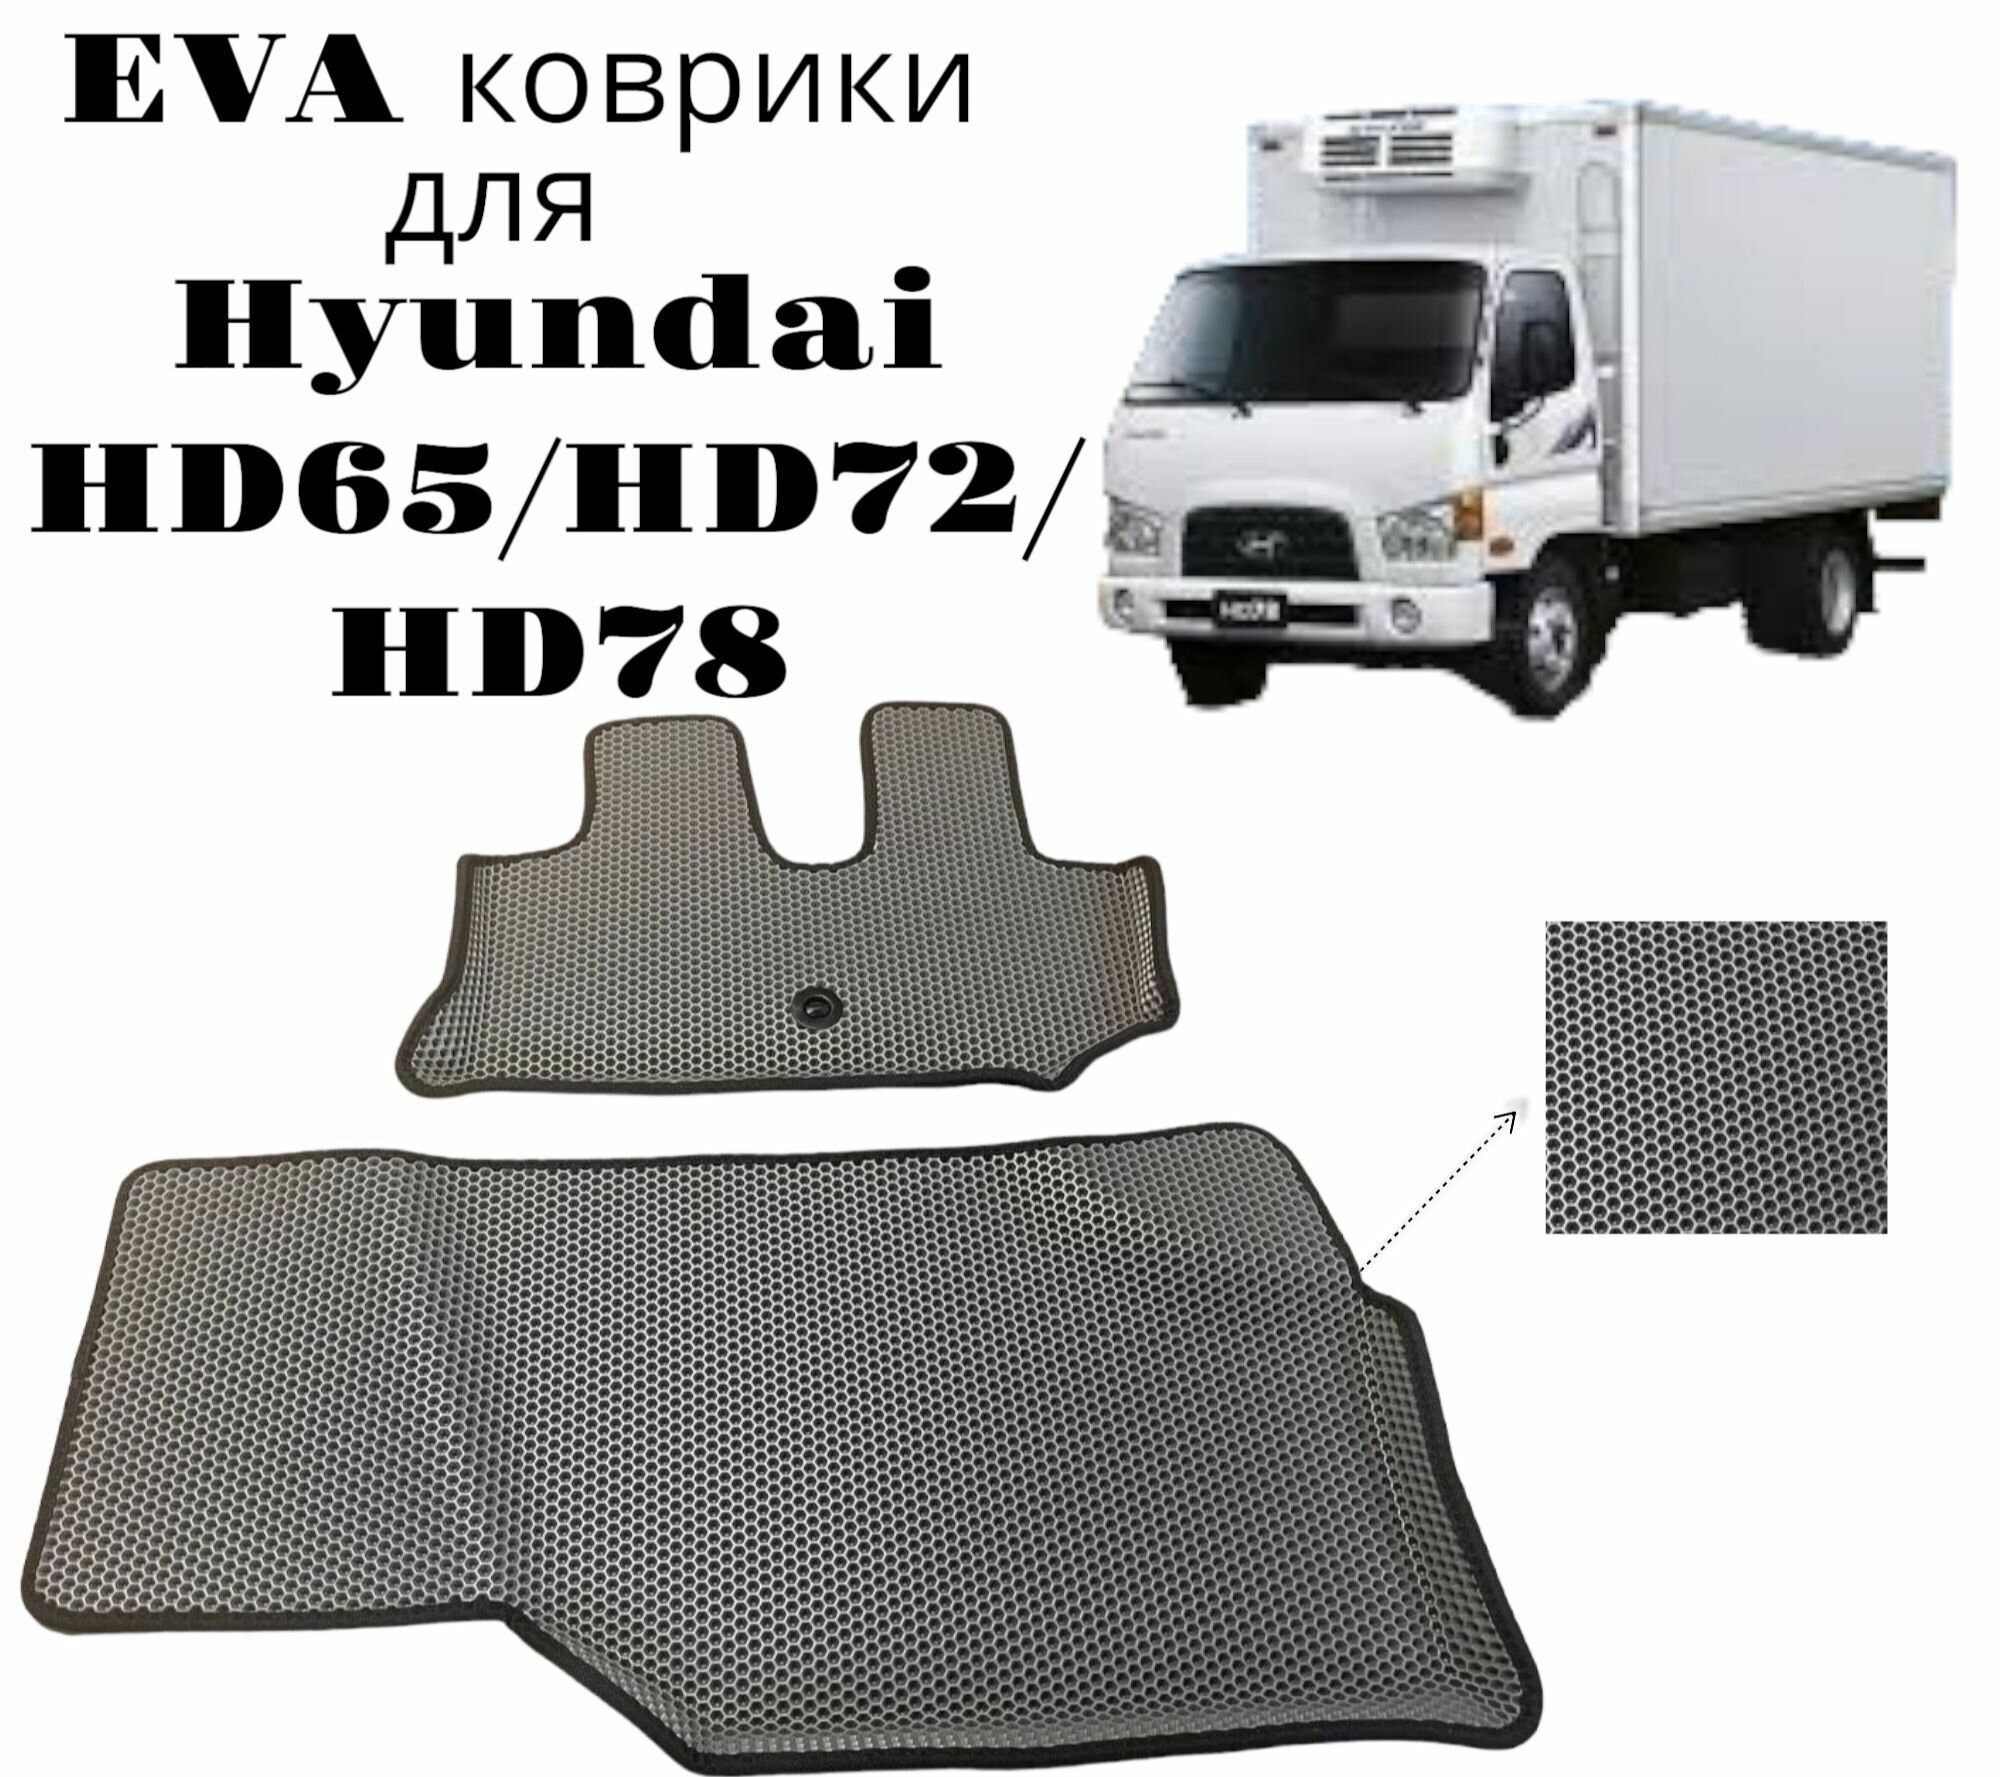 EVA ЭВА коврики Hyundai HD 78/HD65/HD72, Хендай HD